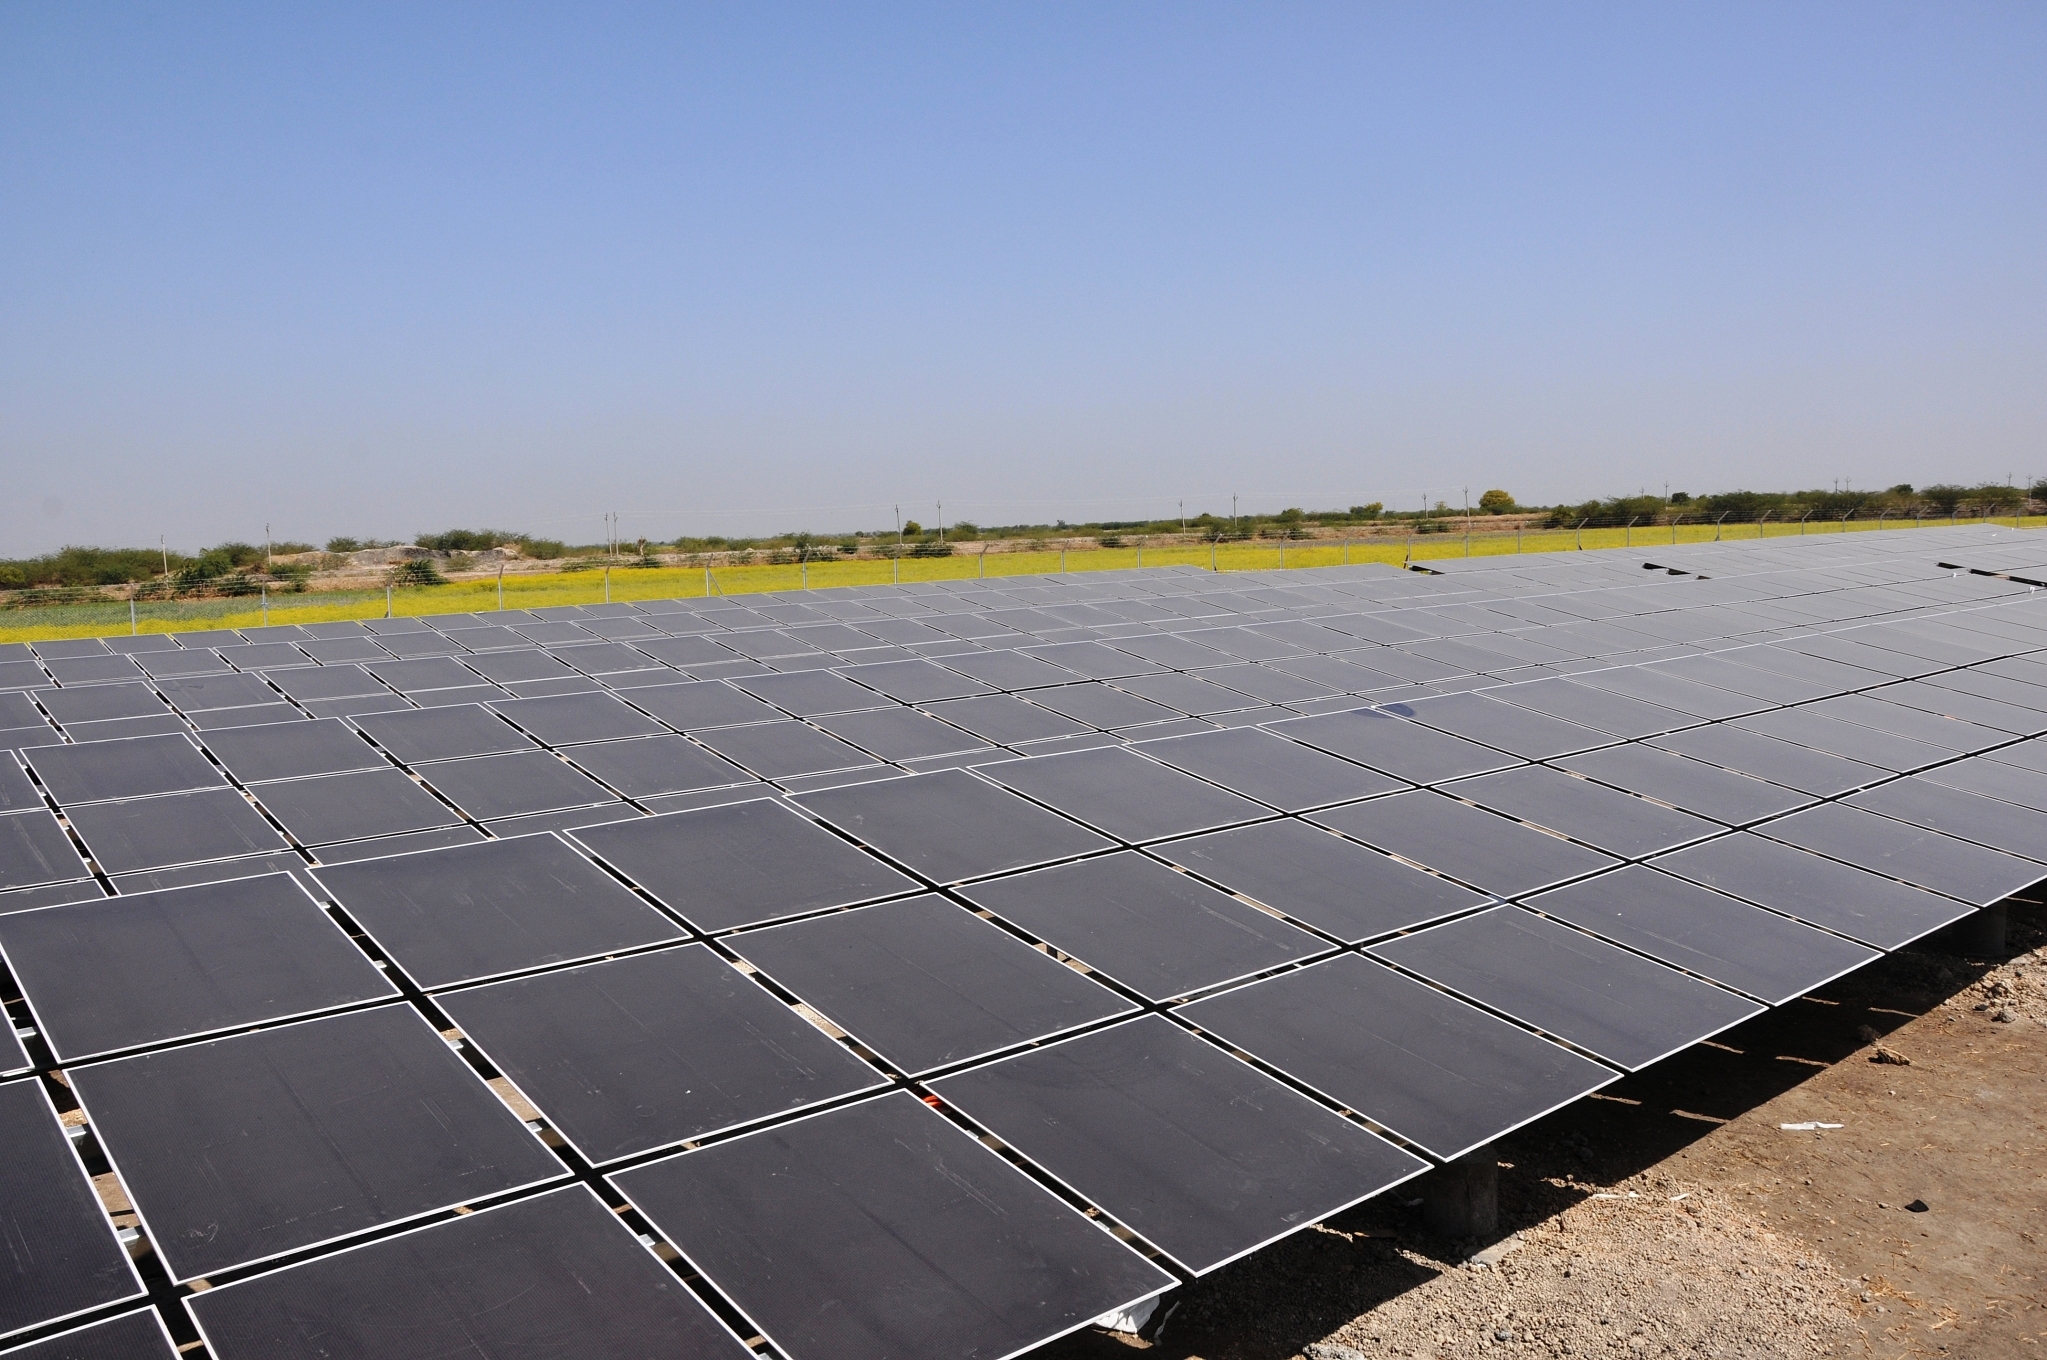  solar power plant in Patan, Gujarat. (representative image) (Citizenmj/Wikimedia Commons)